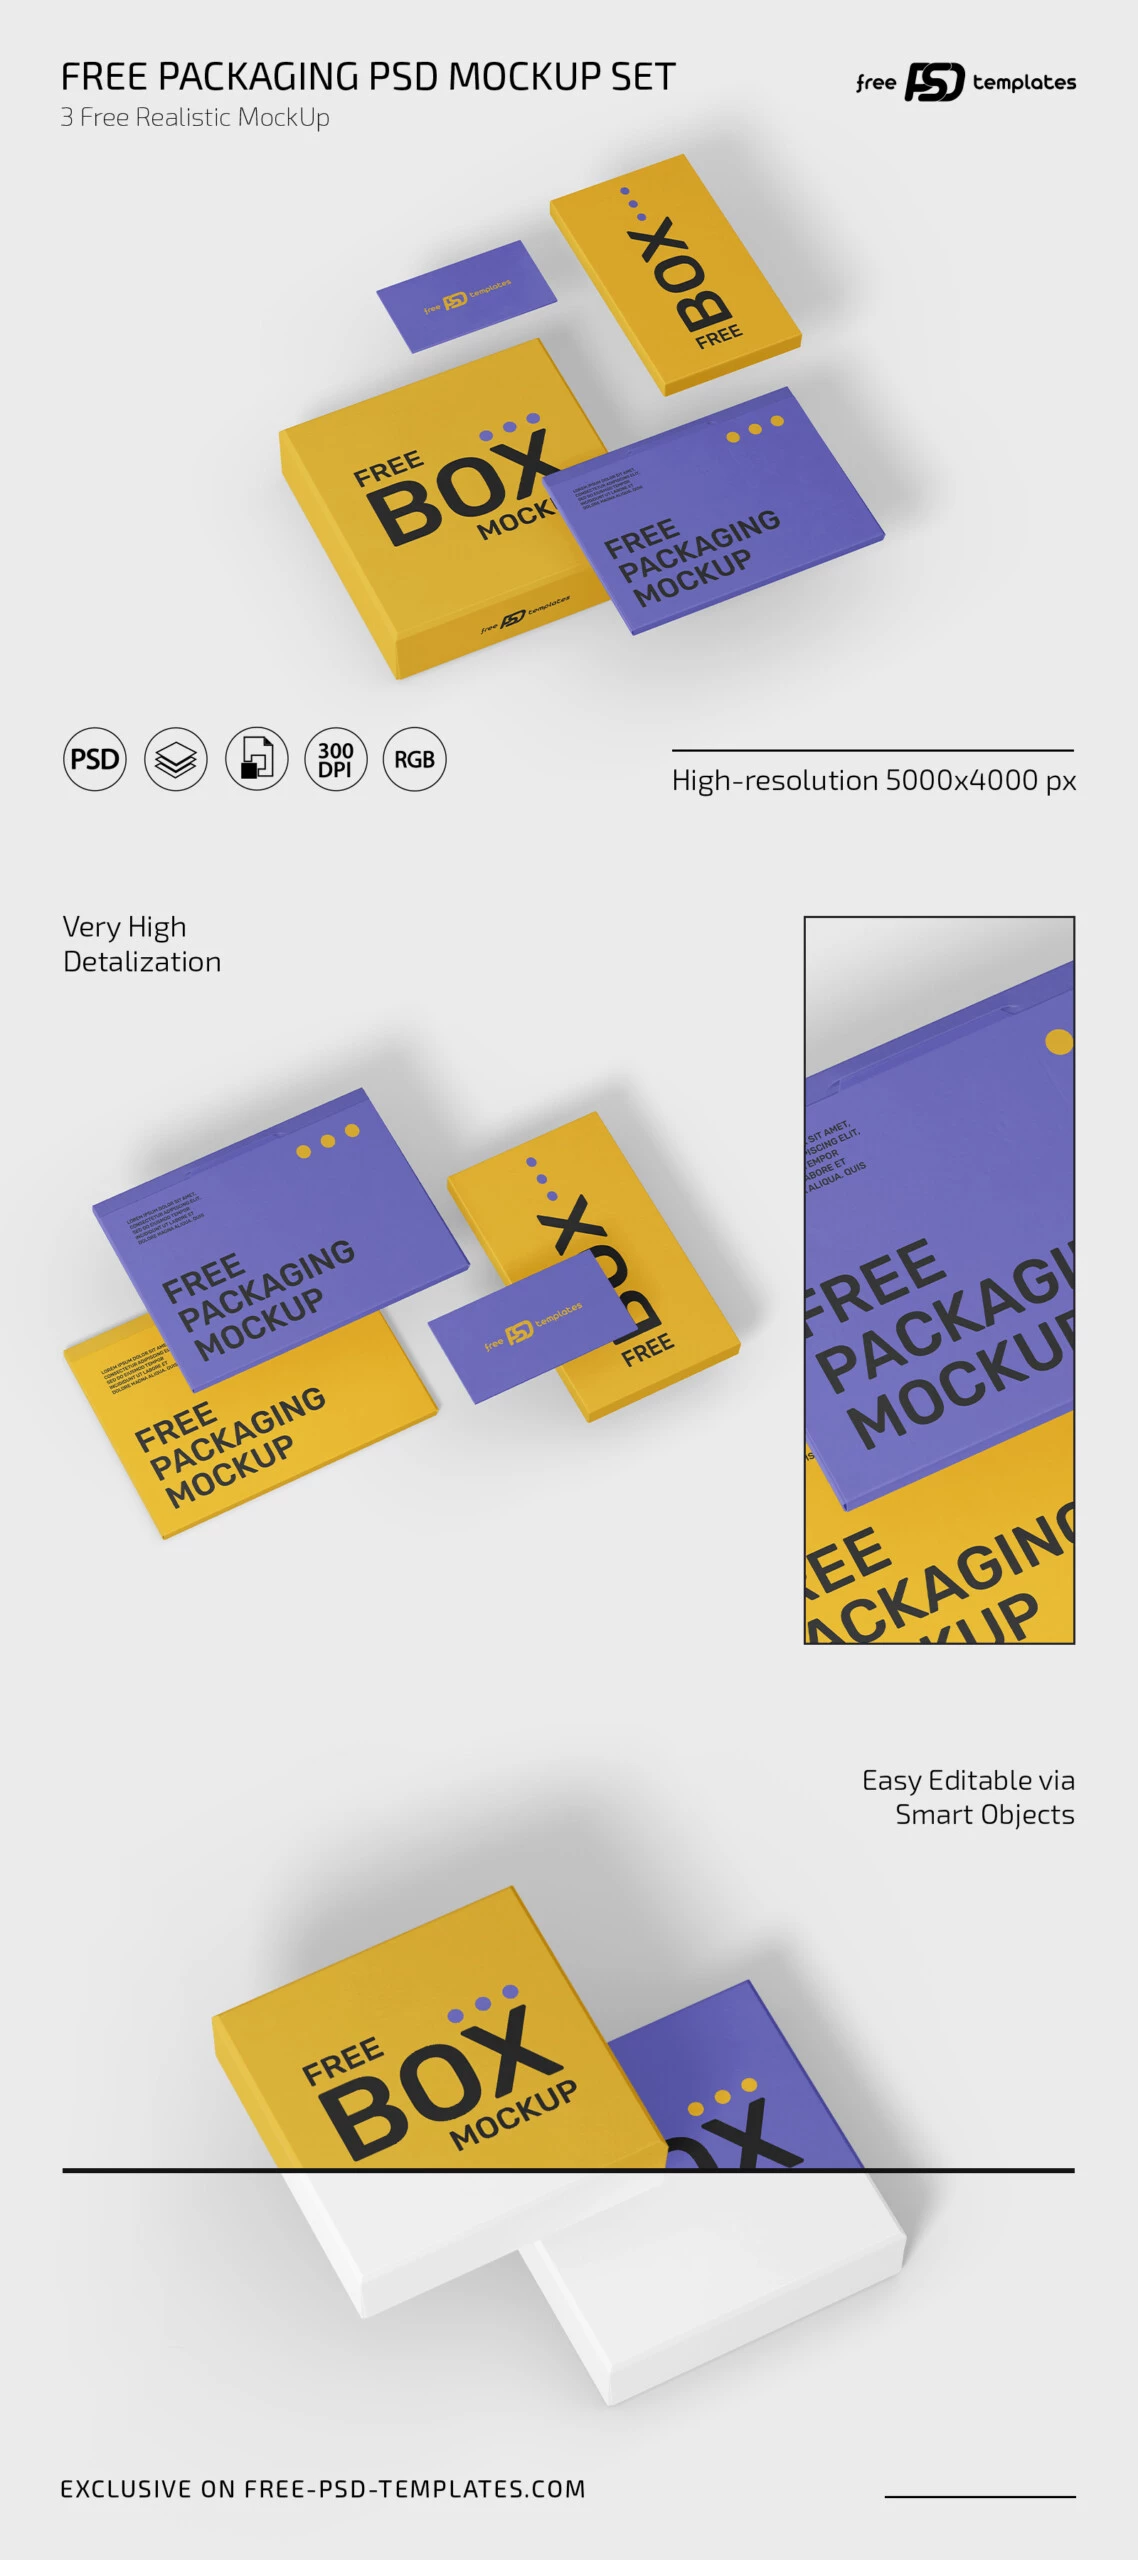 Free Packaging PSD Mockup